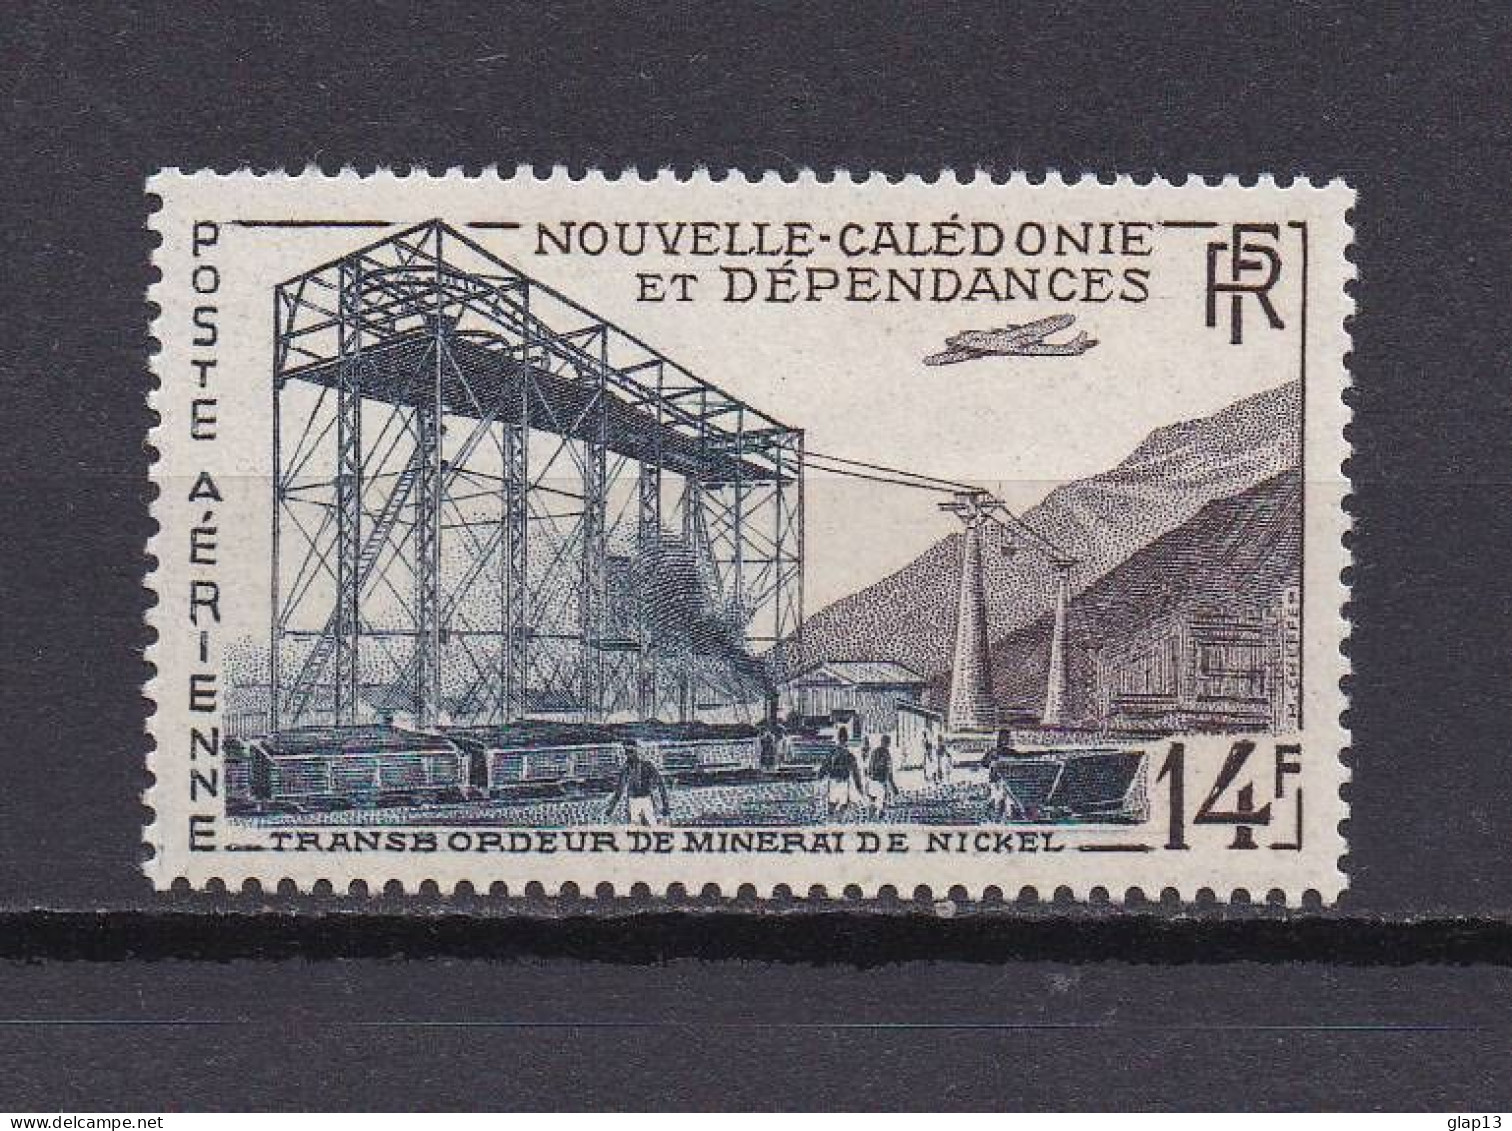 NOUVELLE-CALEDONIE 1955 PA N°66 NEUF AVEC CHARNIERE TRANSBORDEUR - Nuovi